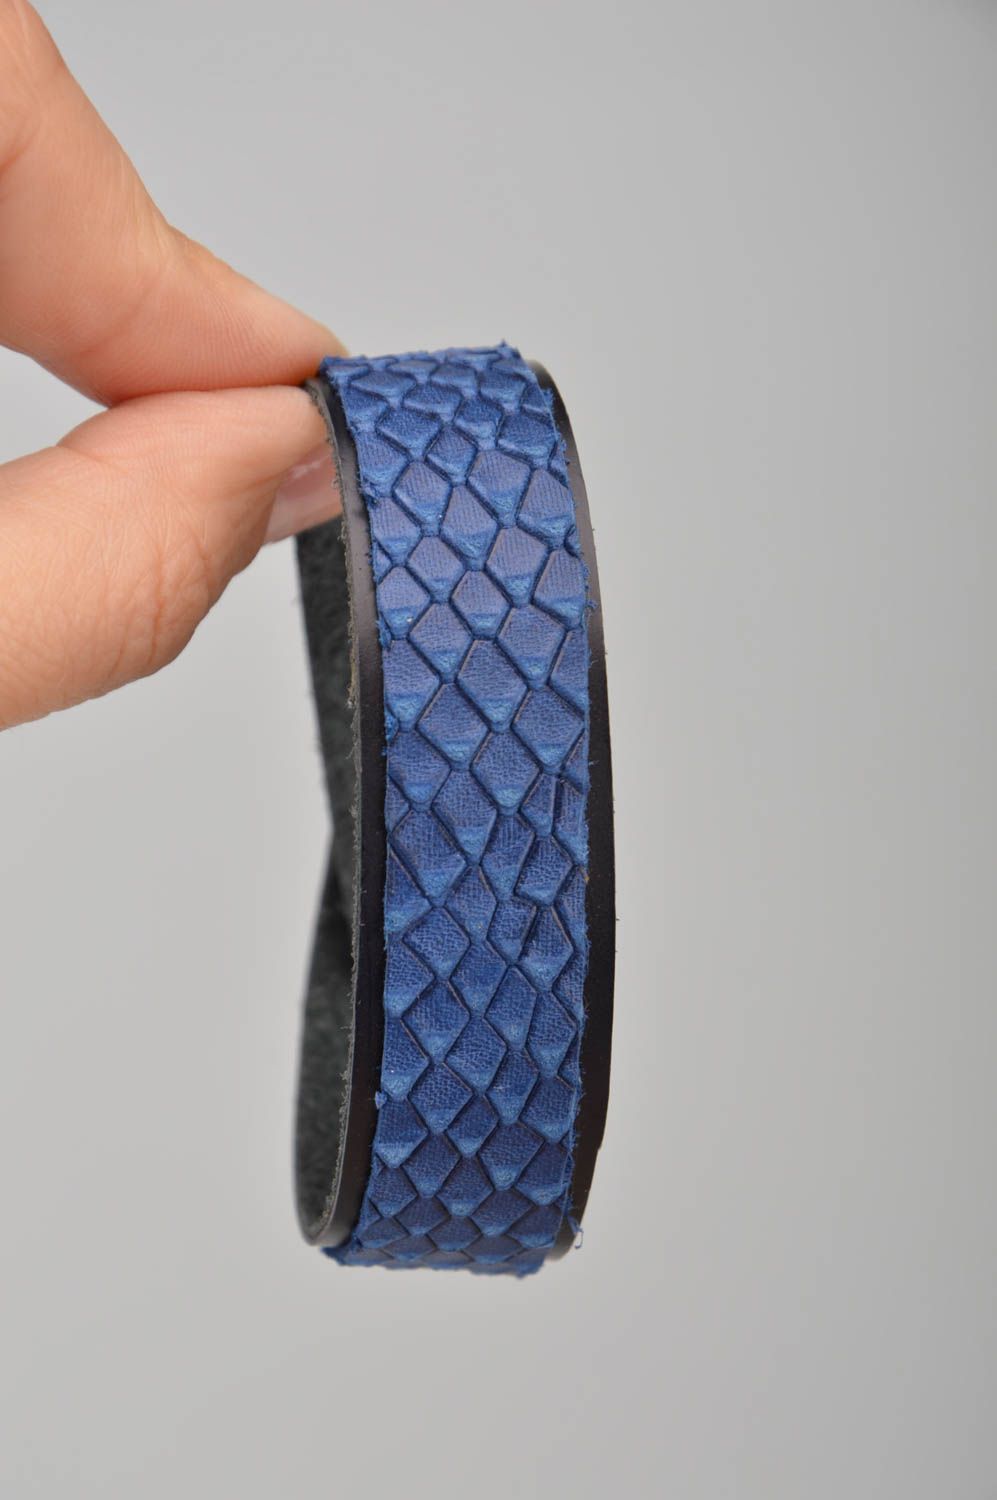 Handmade designer black and blue leather wrist bracelet styled of snakeskin photo 3